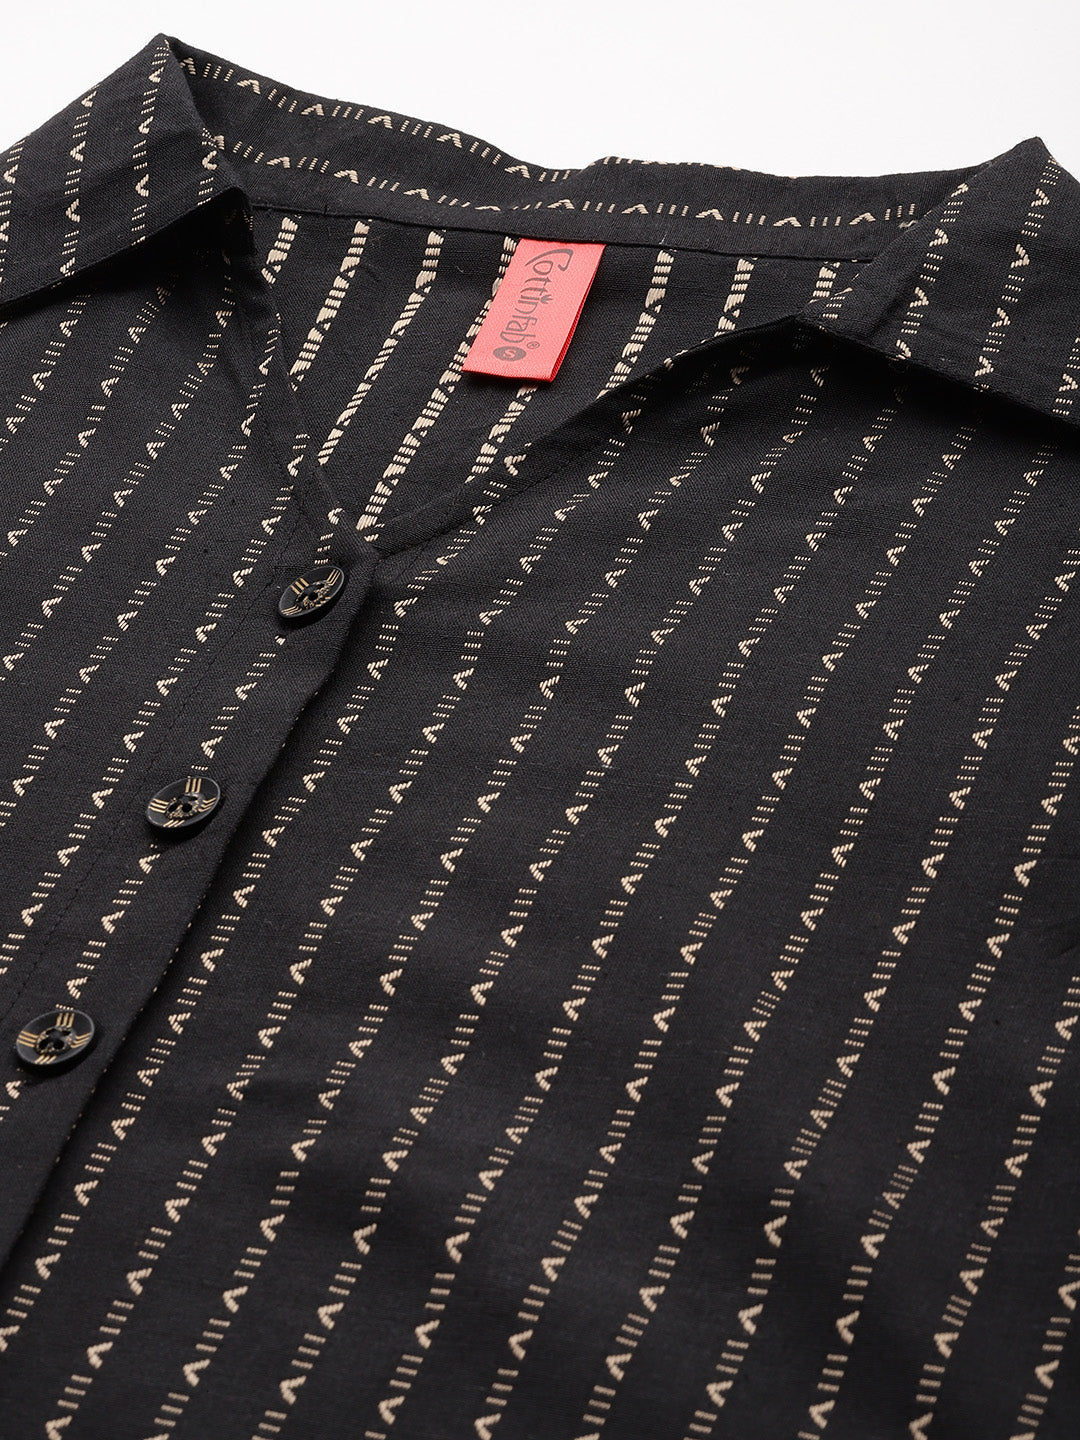 Cottinfab Striped Monochrome Cotton Shirt Style Longline Top